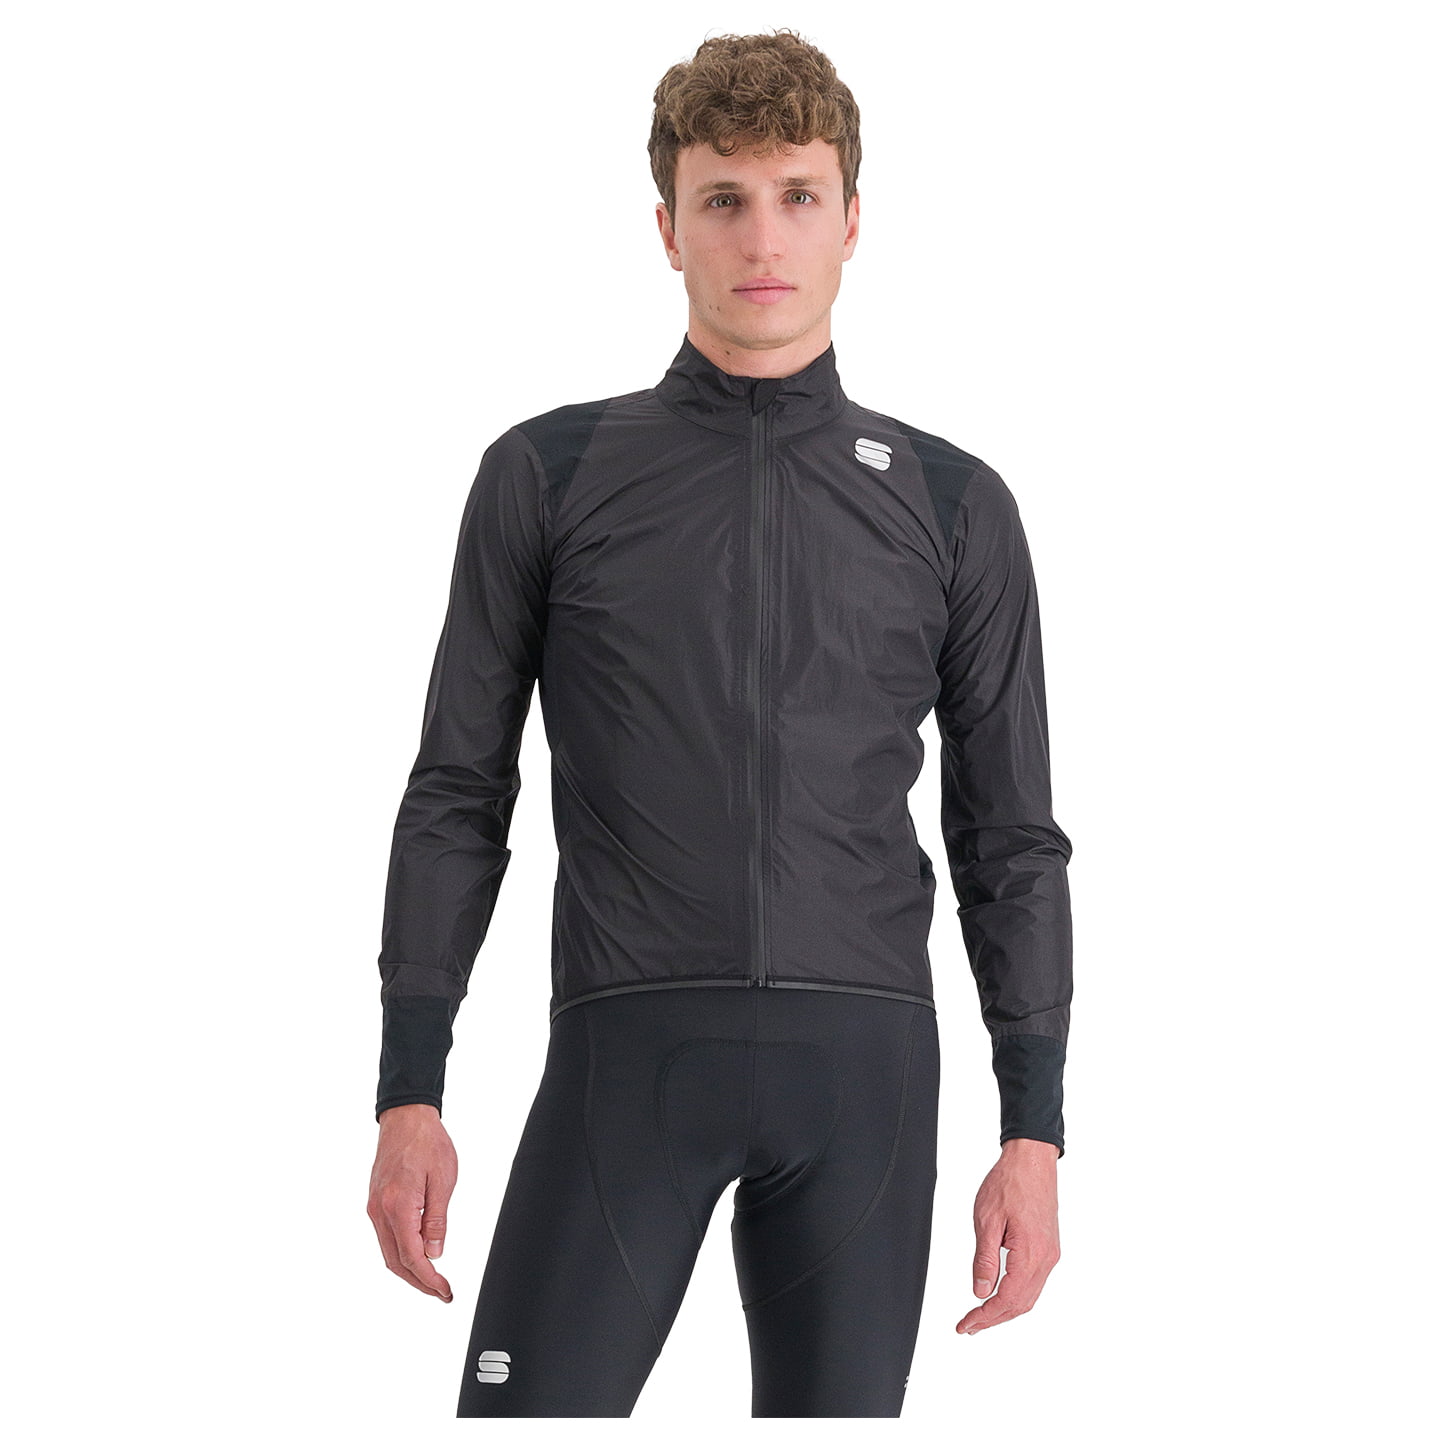 SPORTFUL Rain Jacket Hot Pack No Rain Waterproof Jacket, for men, size M, Bike jacket, Cycling clothing